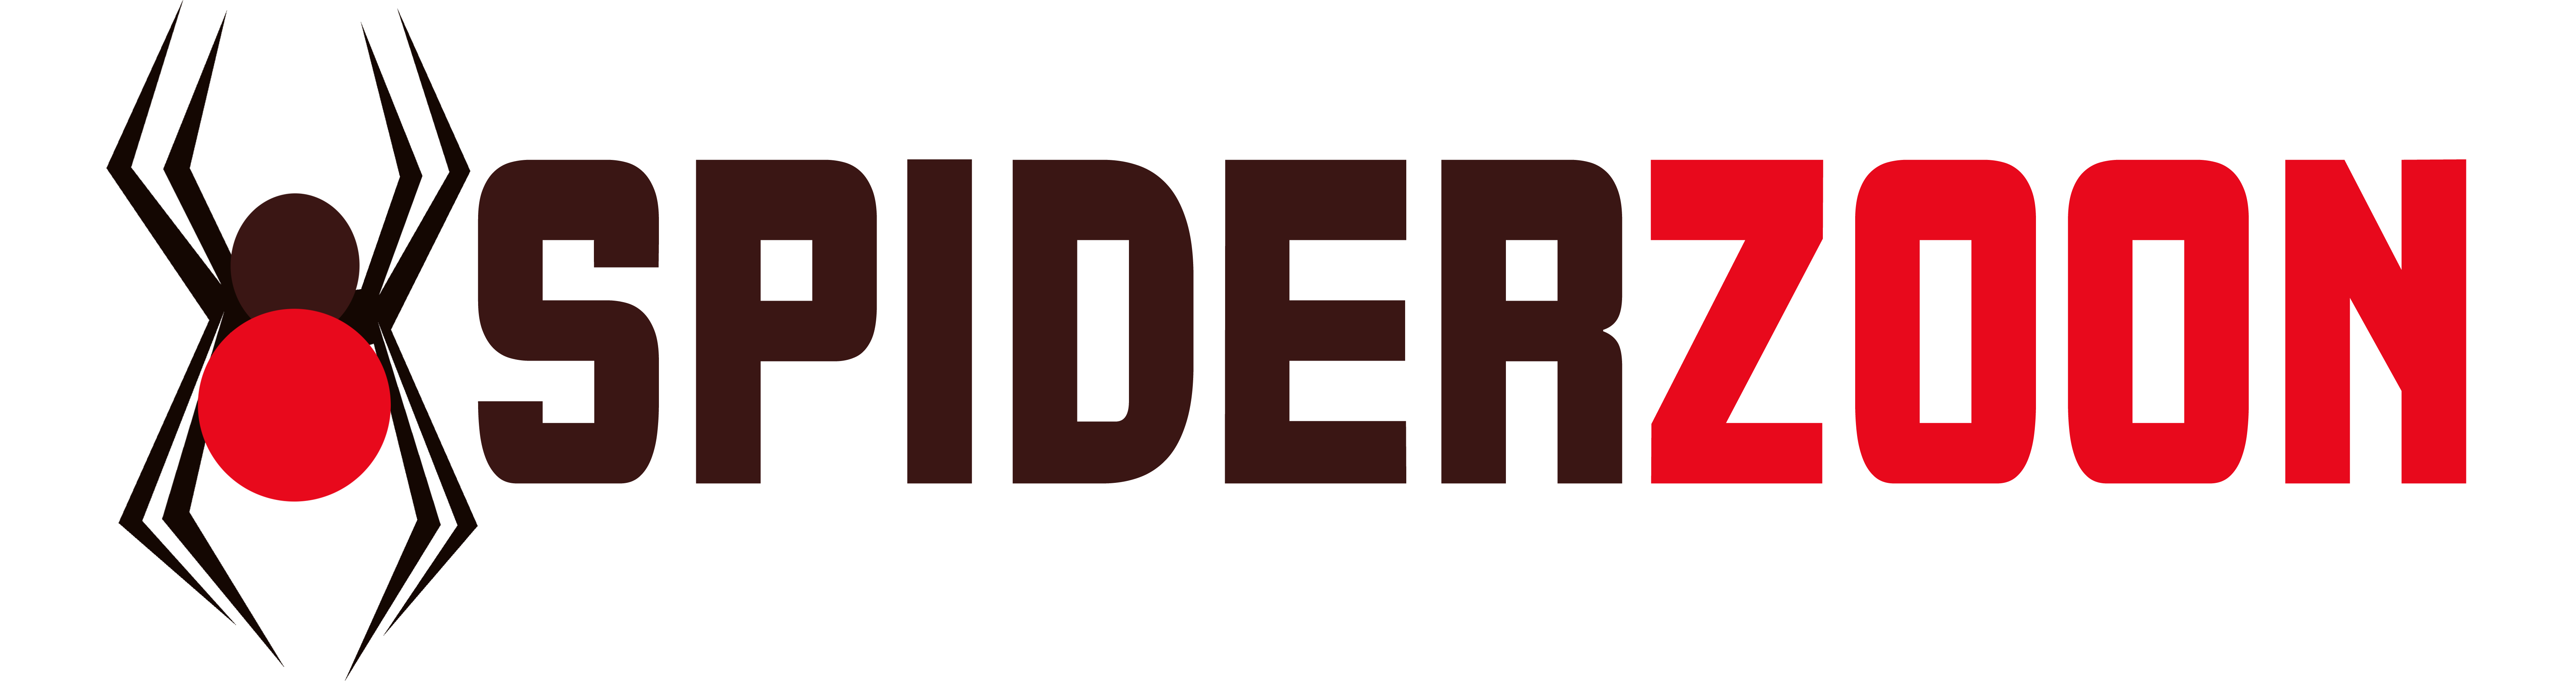 Spiderzoon logo